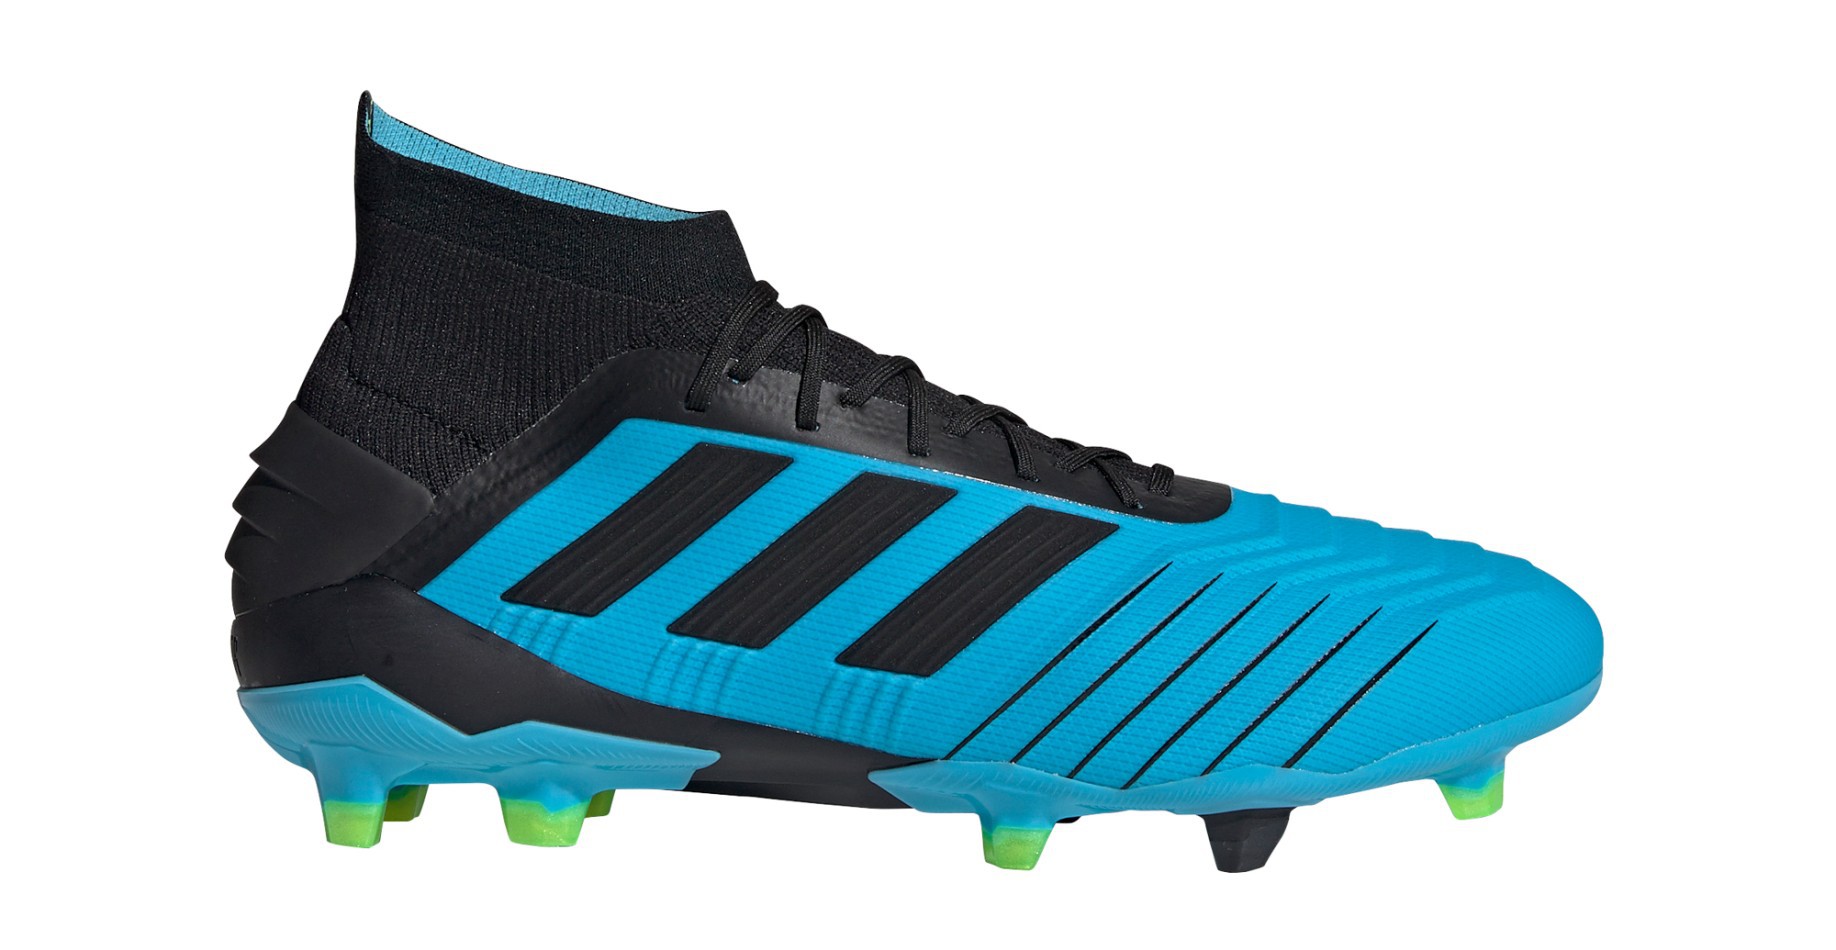 Botas de fútbol Adidas Predator 19.1 FG Cableados colore azul negro - Adidas -